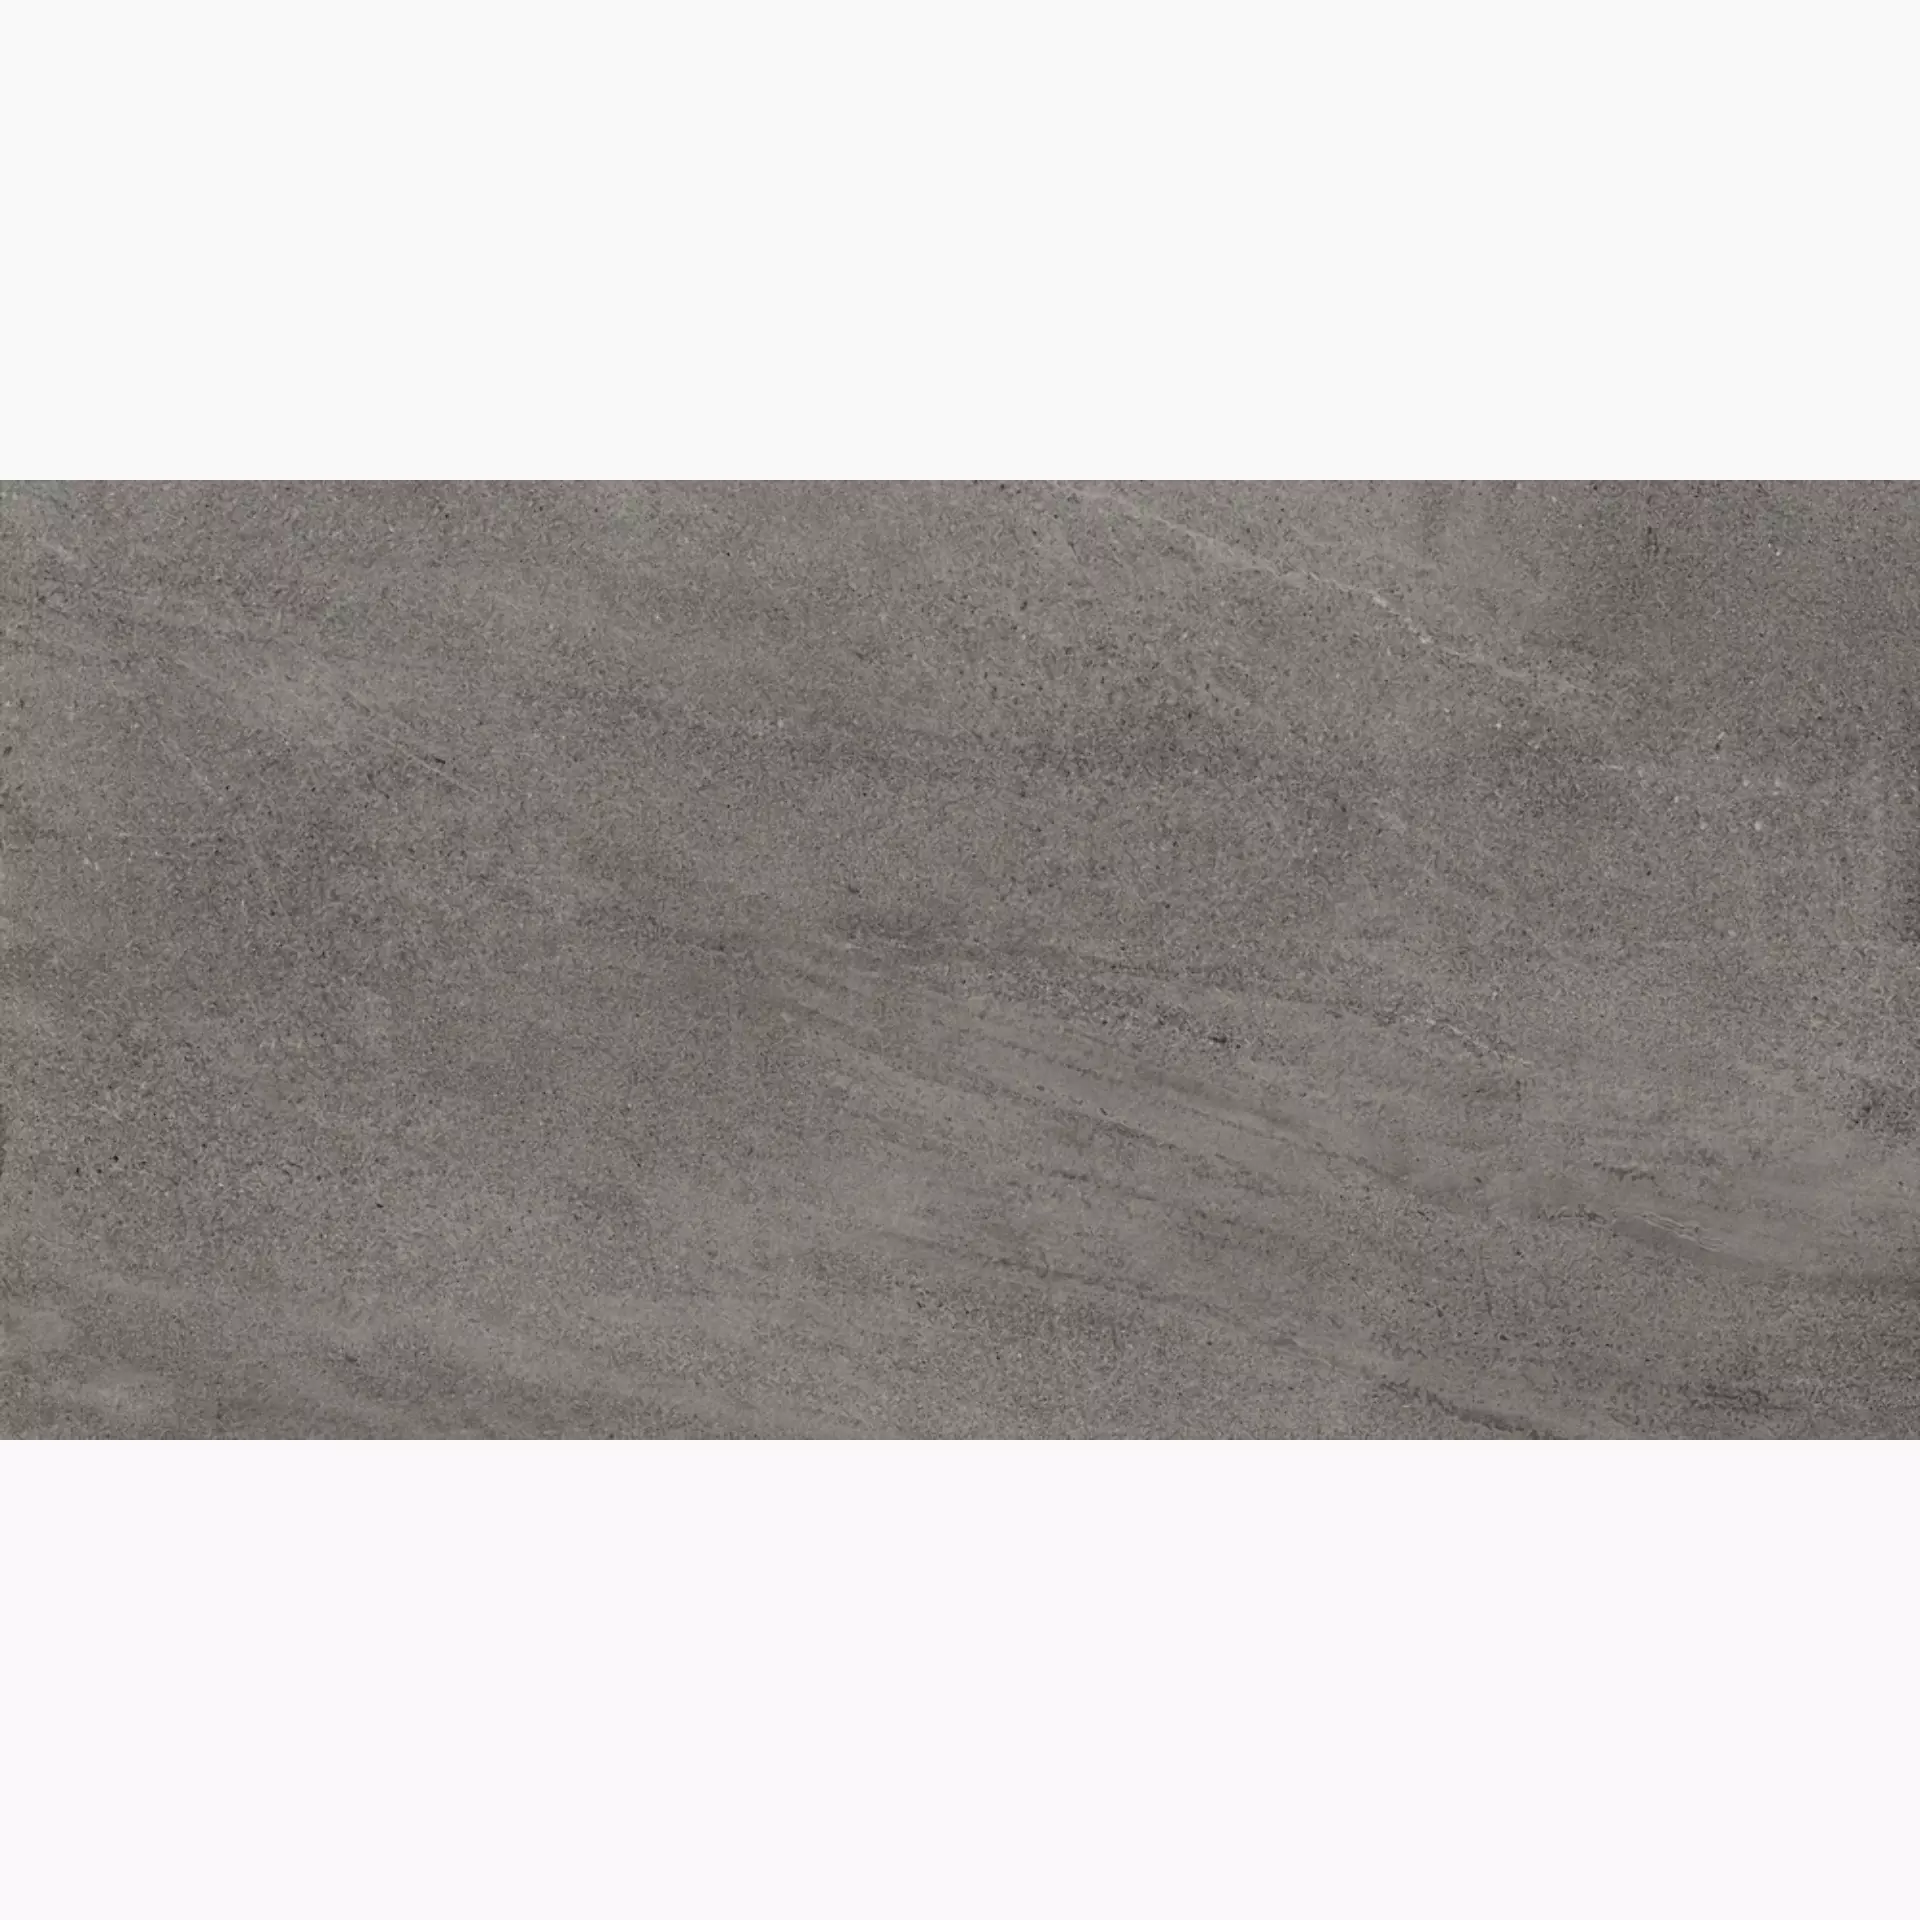 Cottodeste Limestone Slate Blazed Protect EG-LS35 30x60cm rectified 14mm